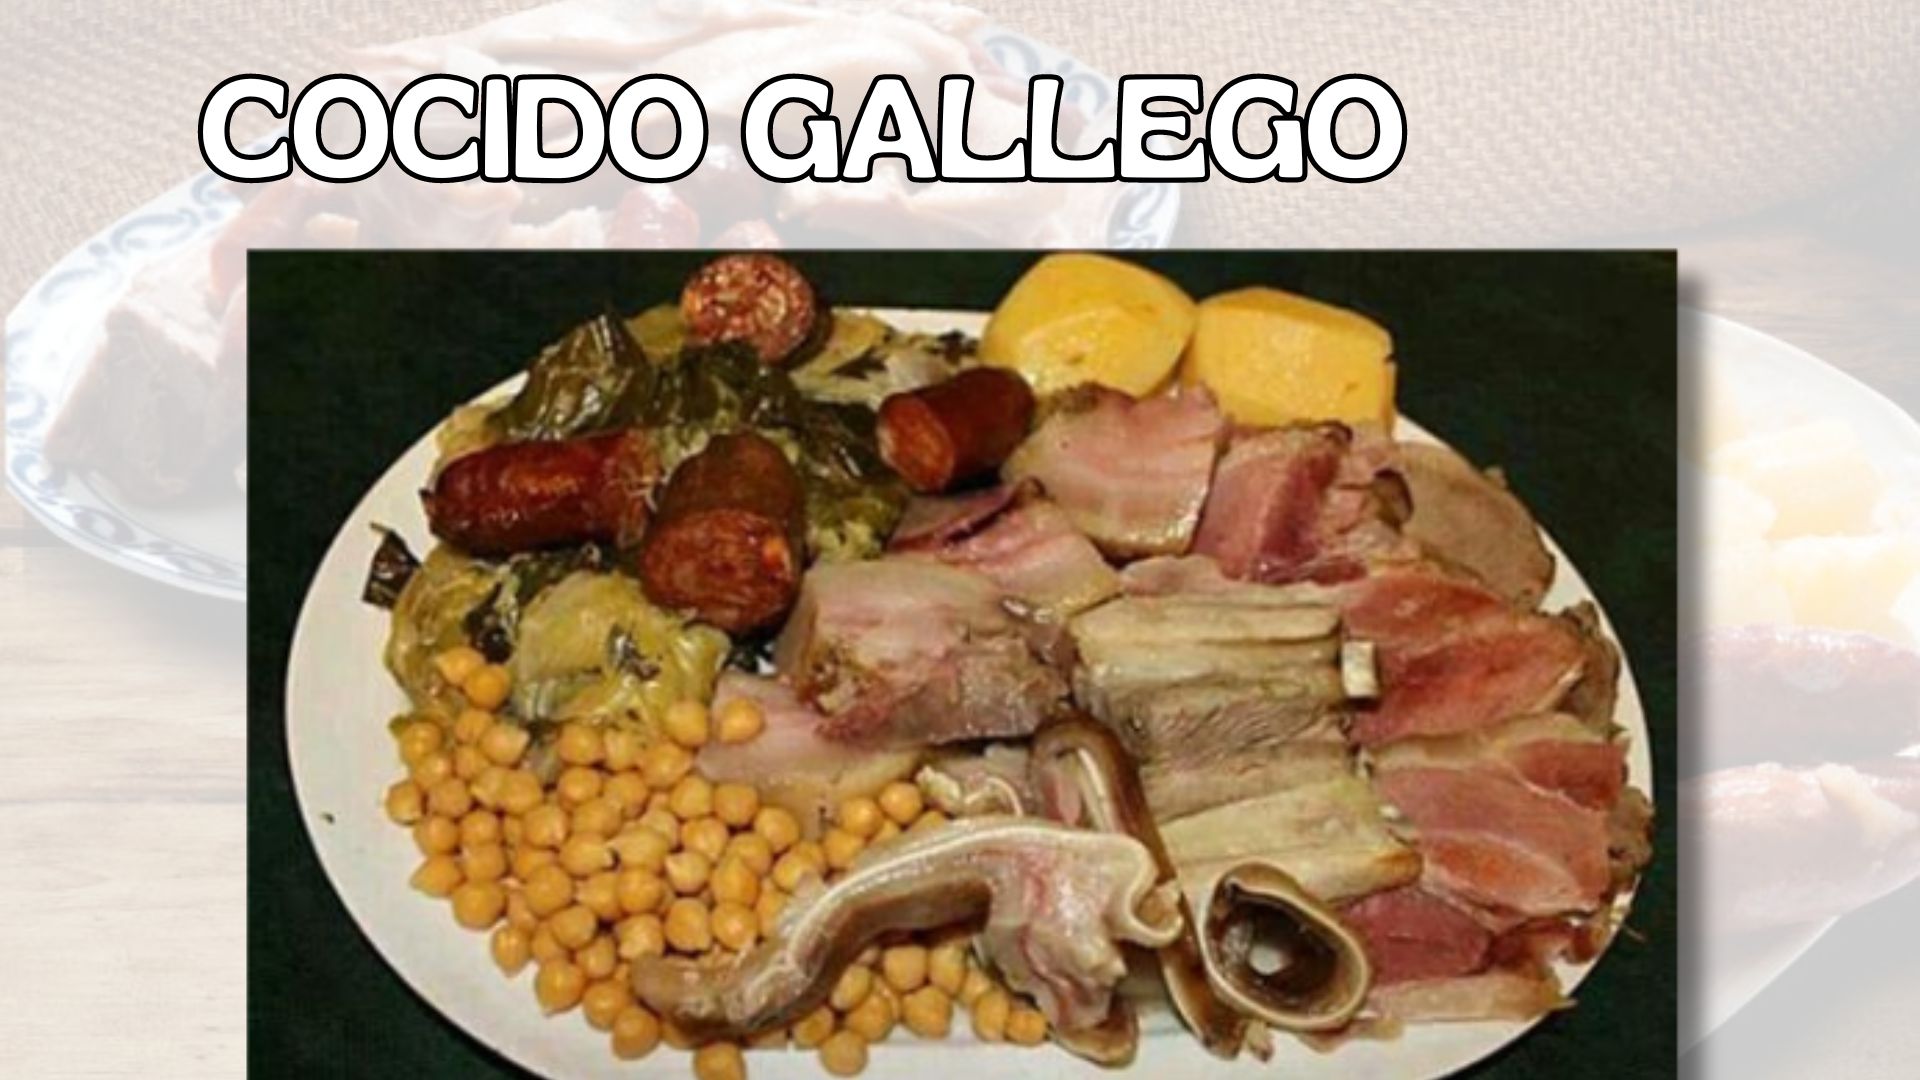 COCIDO GALLEGO